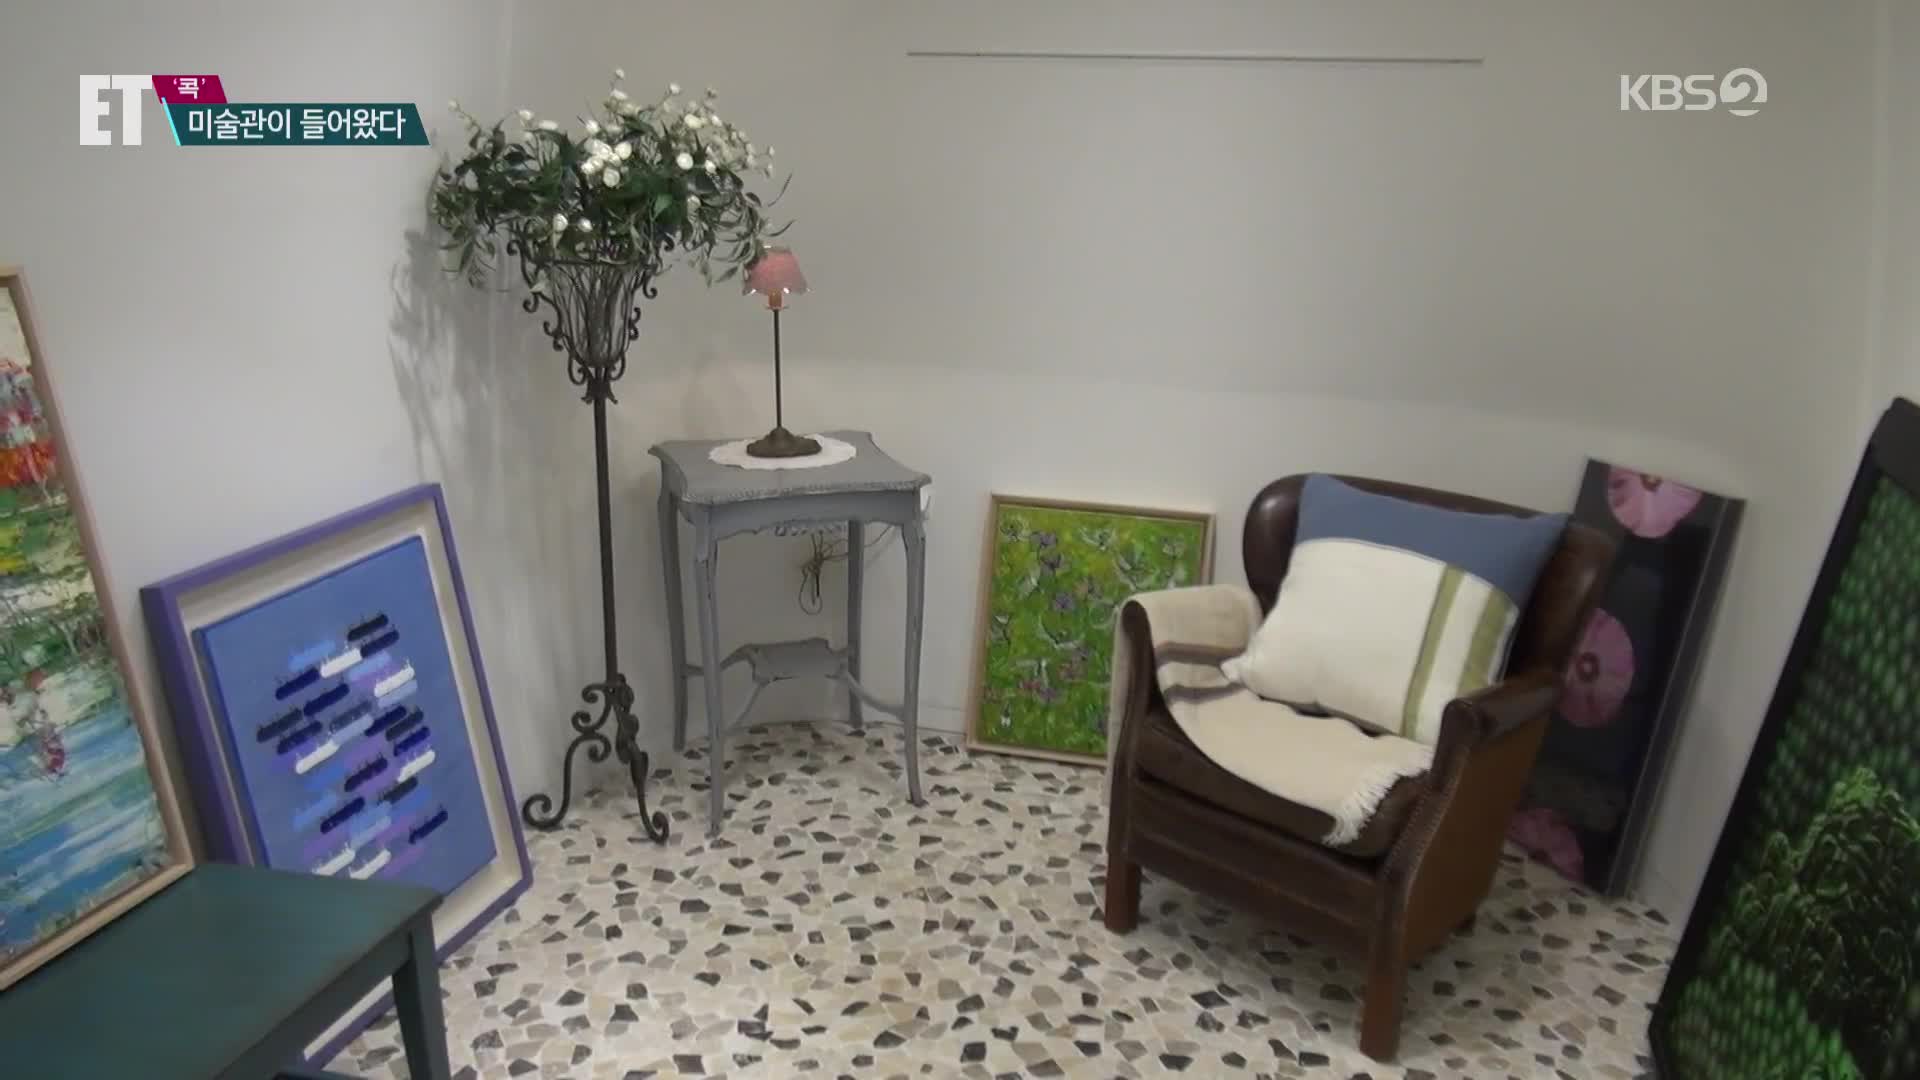 [ET] 우리 집, 갤러리 변신…미술품 빌려 본다